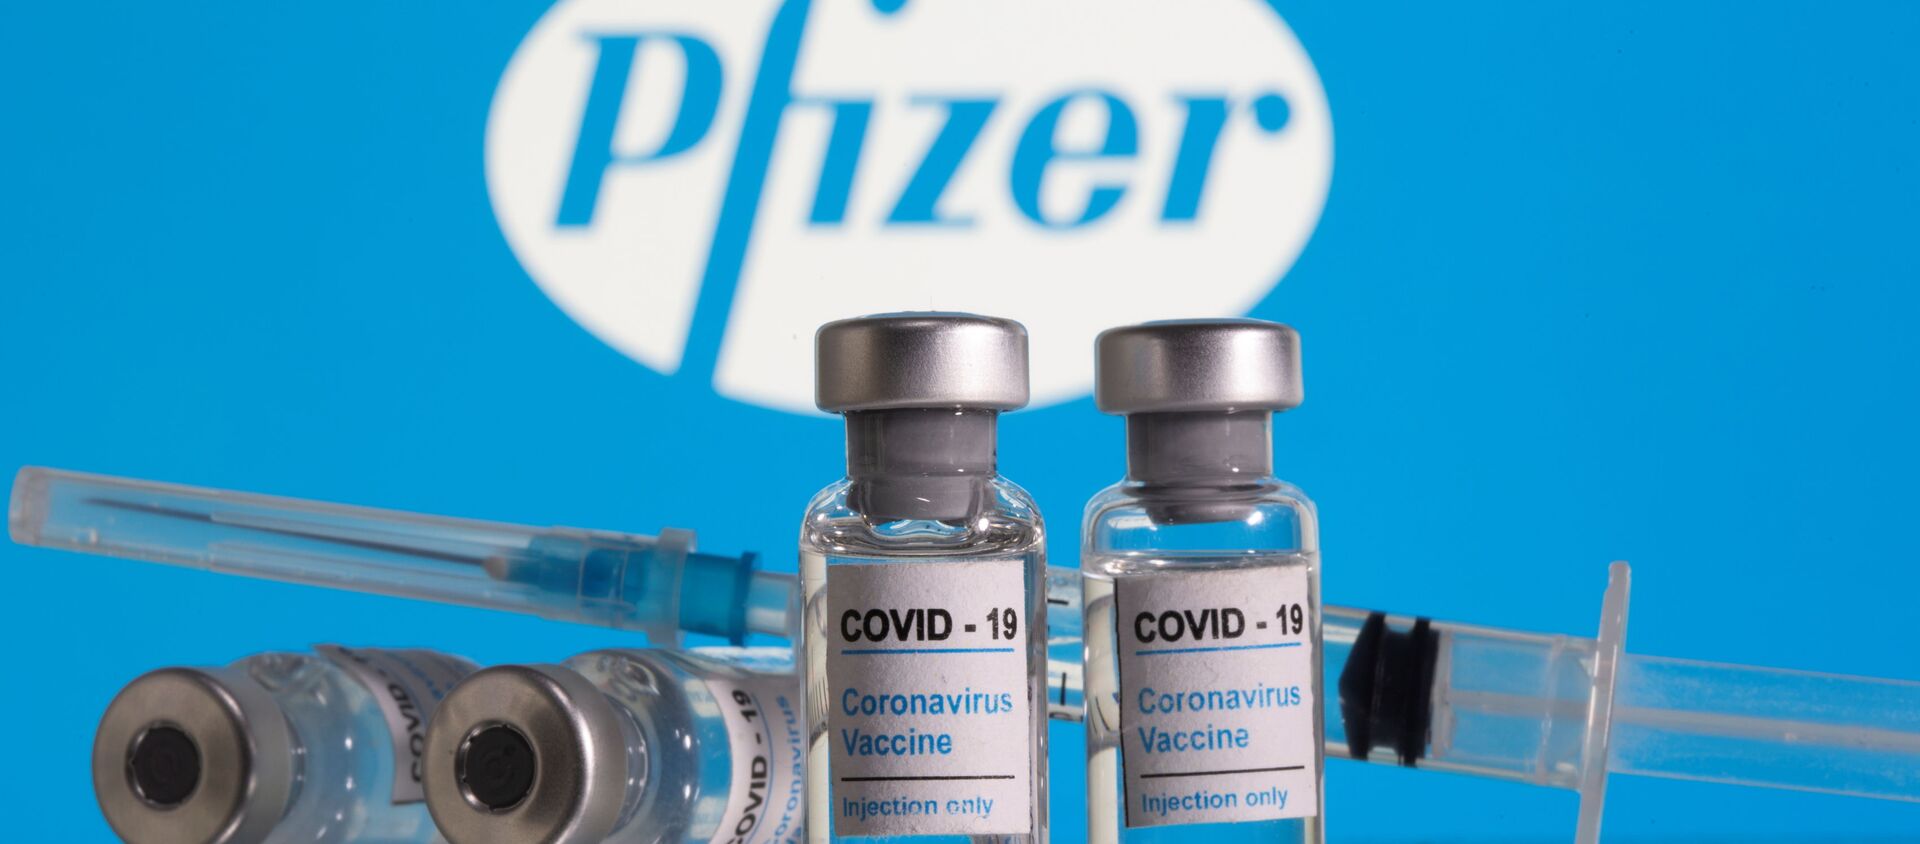 Вакцина от COVID-19 производства компании Pfizer - Sputnik Latvija, 1920, 13.03.2021